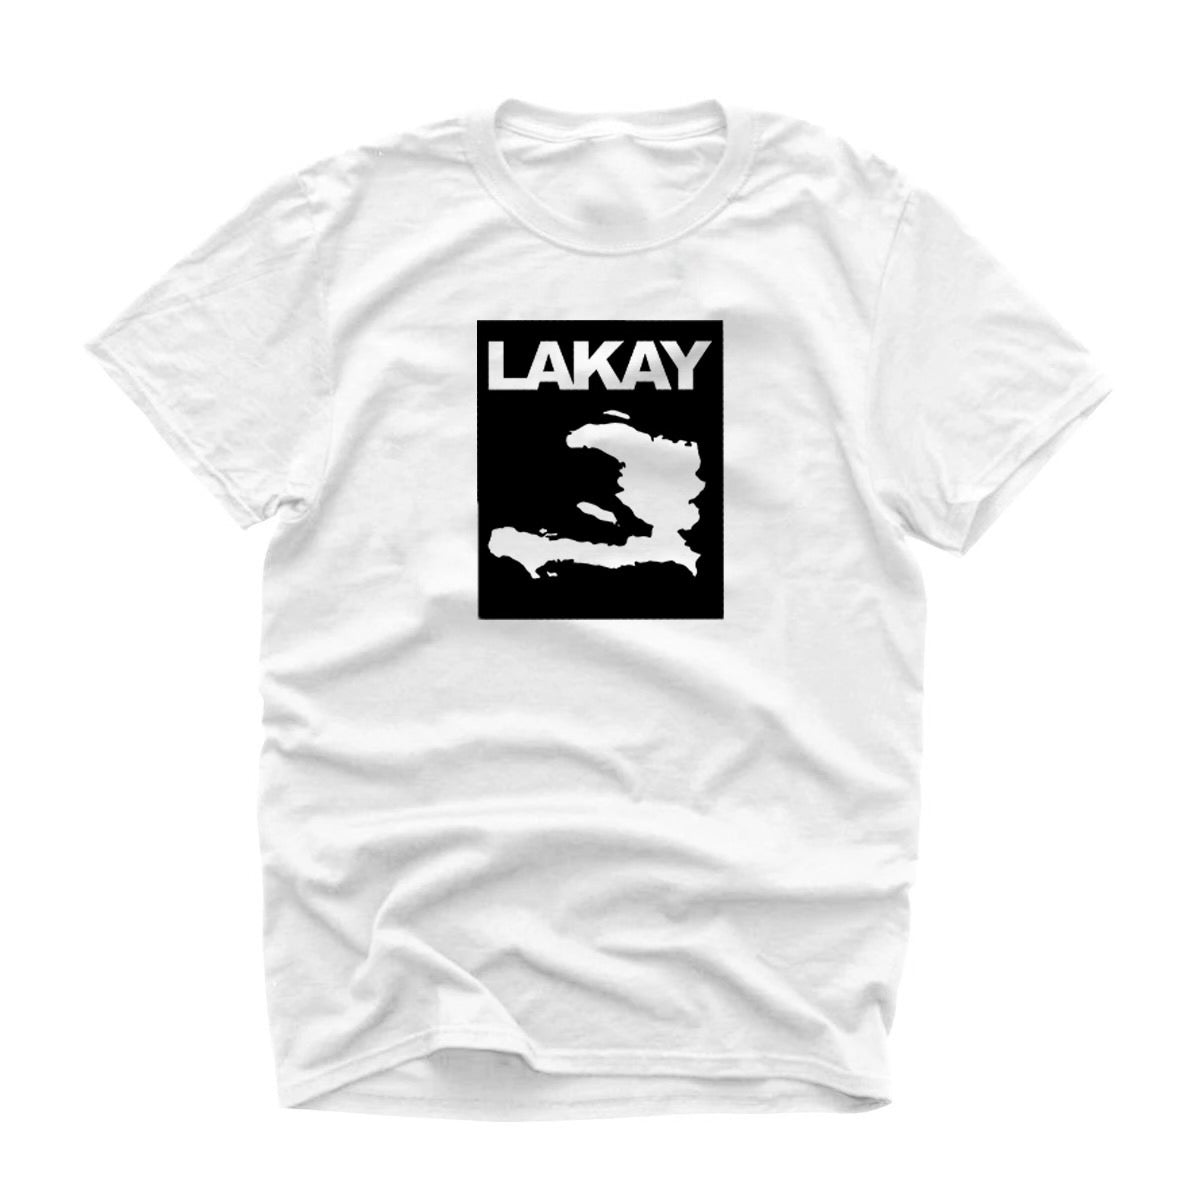 Lakay Black